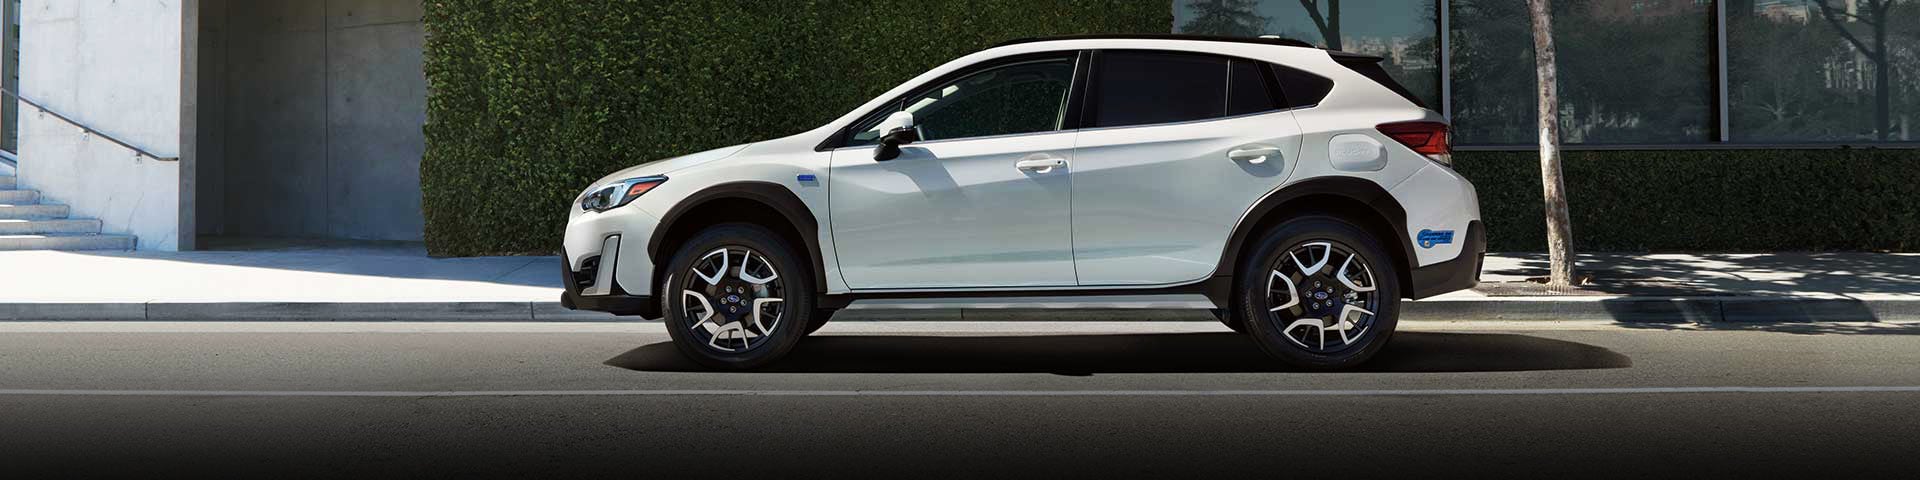 The side profile of a white Subaru Crosstrek Hybrid | Puente Hills Subaru in City of Industry CA